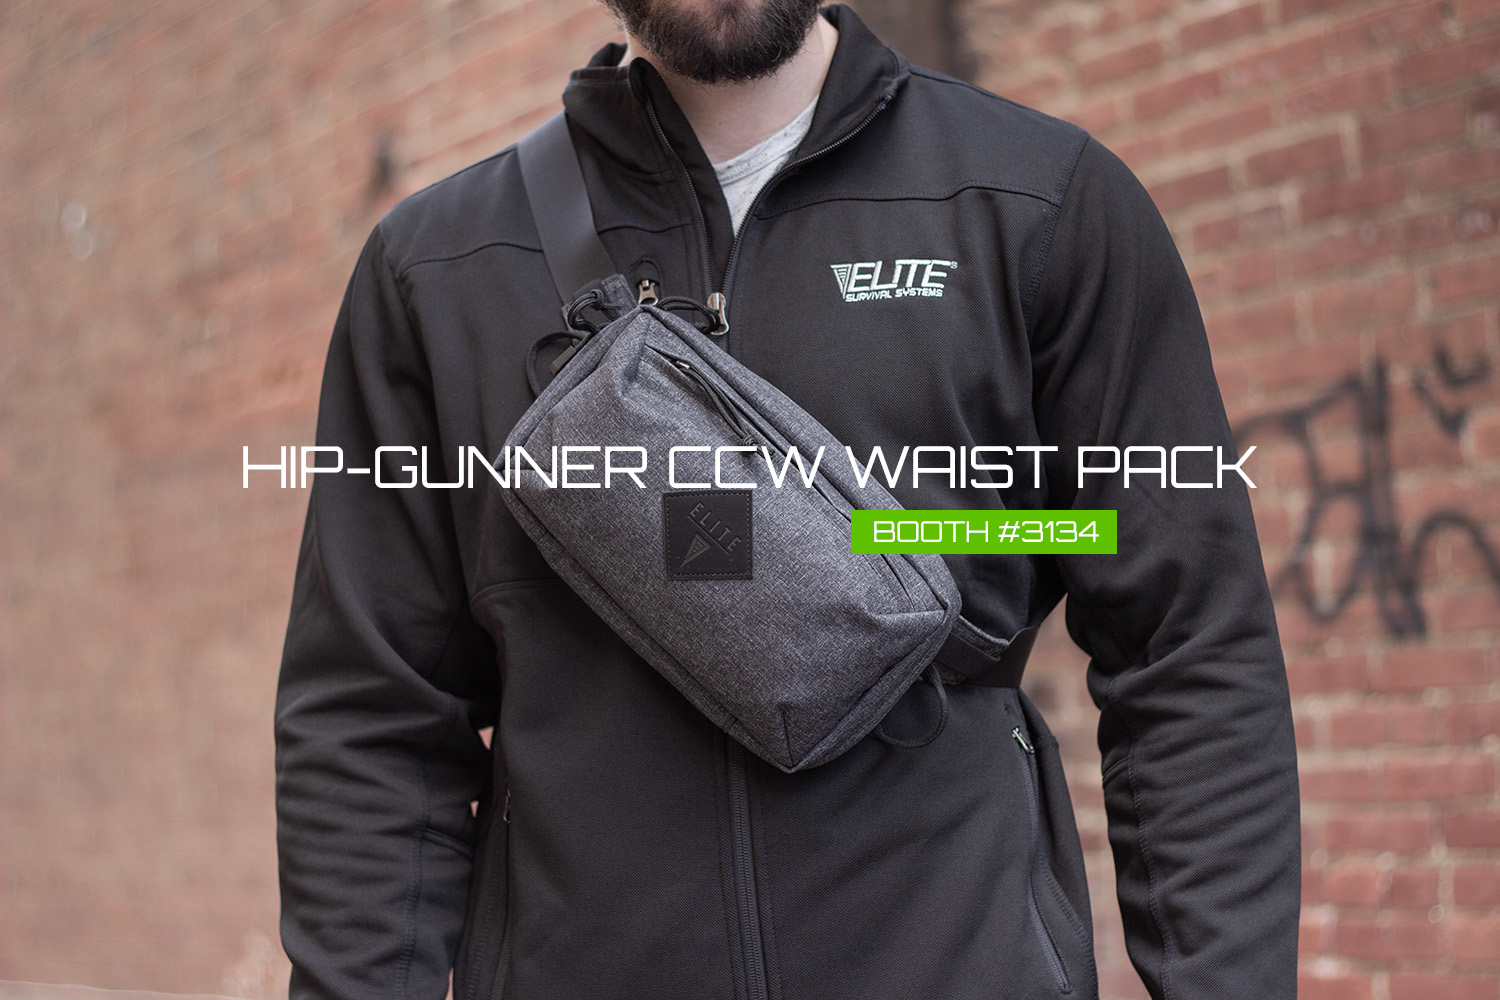 Elite Survival Hip Gunner Concealed Carry Fanny Pack - Stylish and Practical Gun Holster Bag